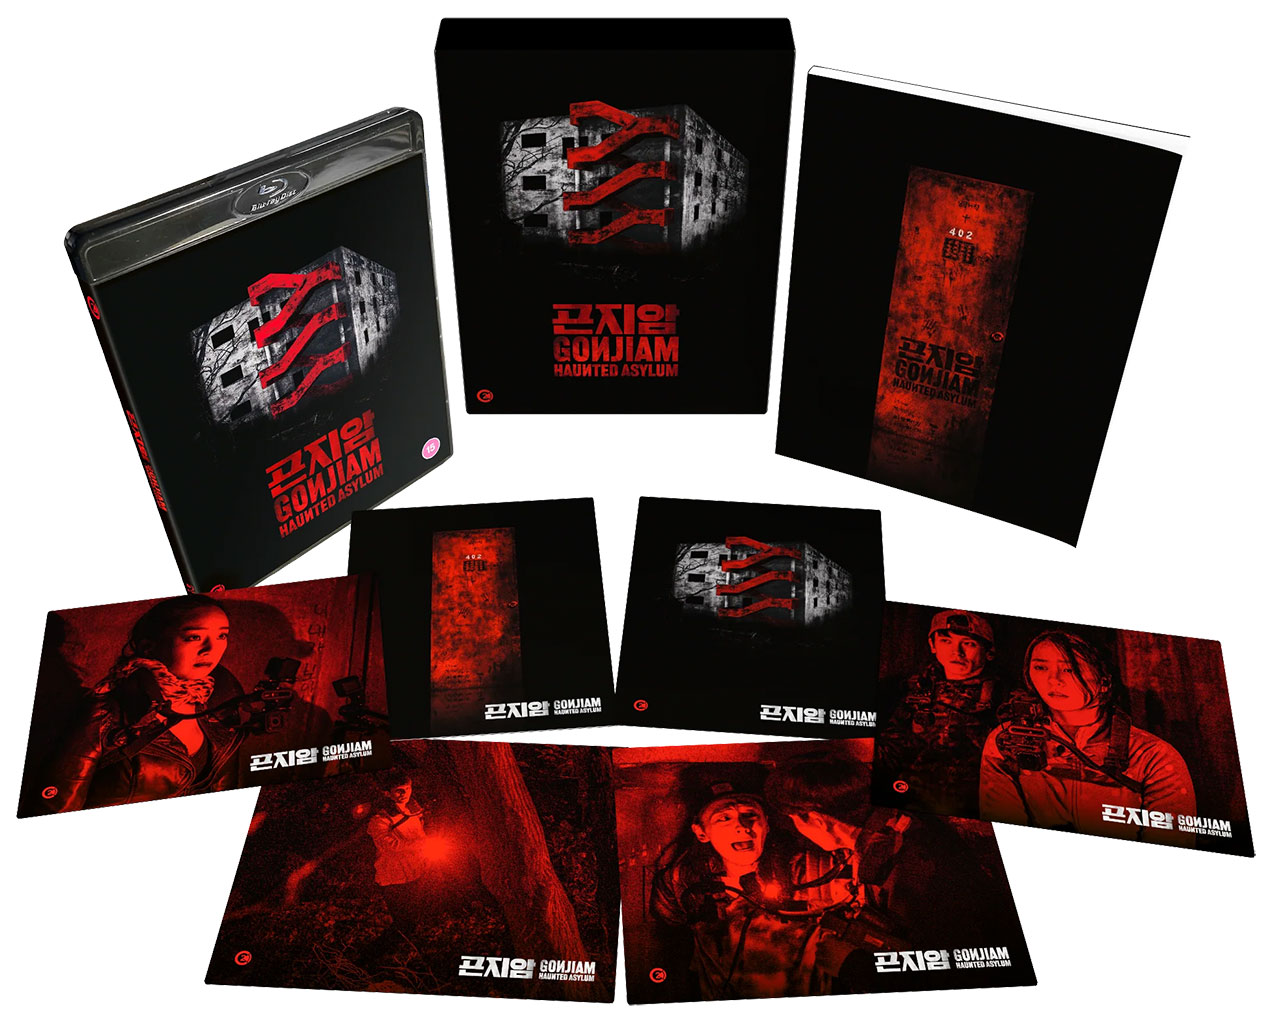 Gonijam: Haunted Hospital Limited Edition Blu-ray pack shot